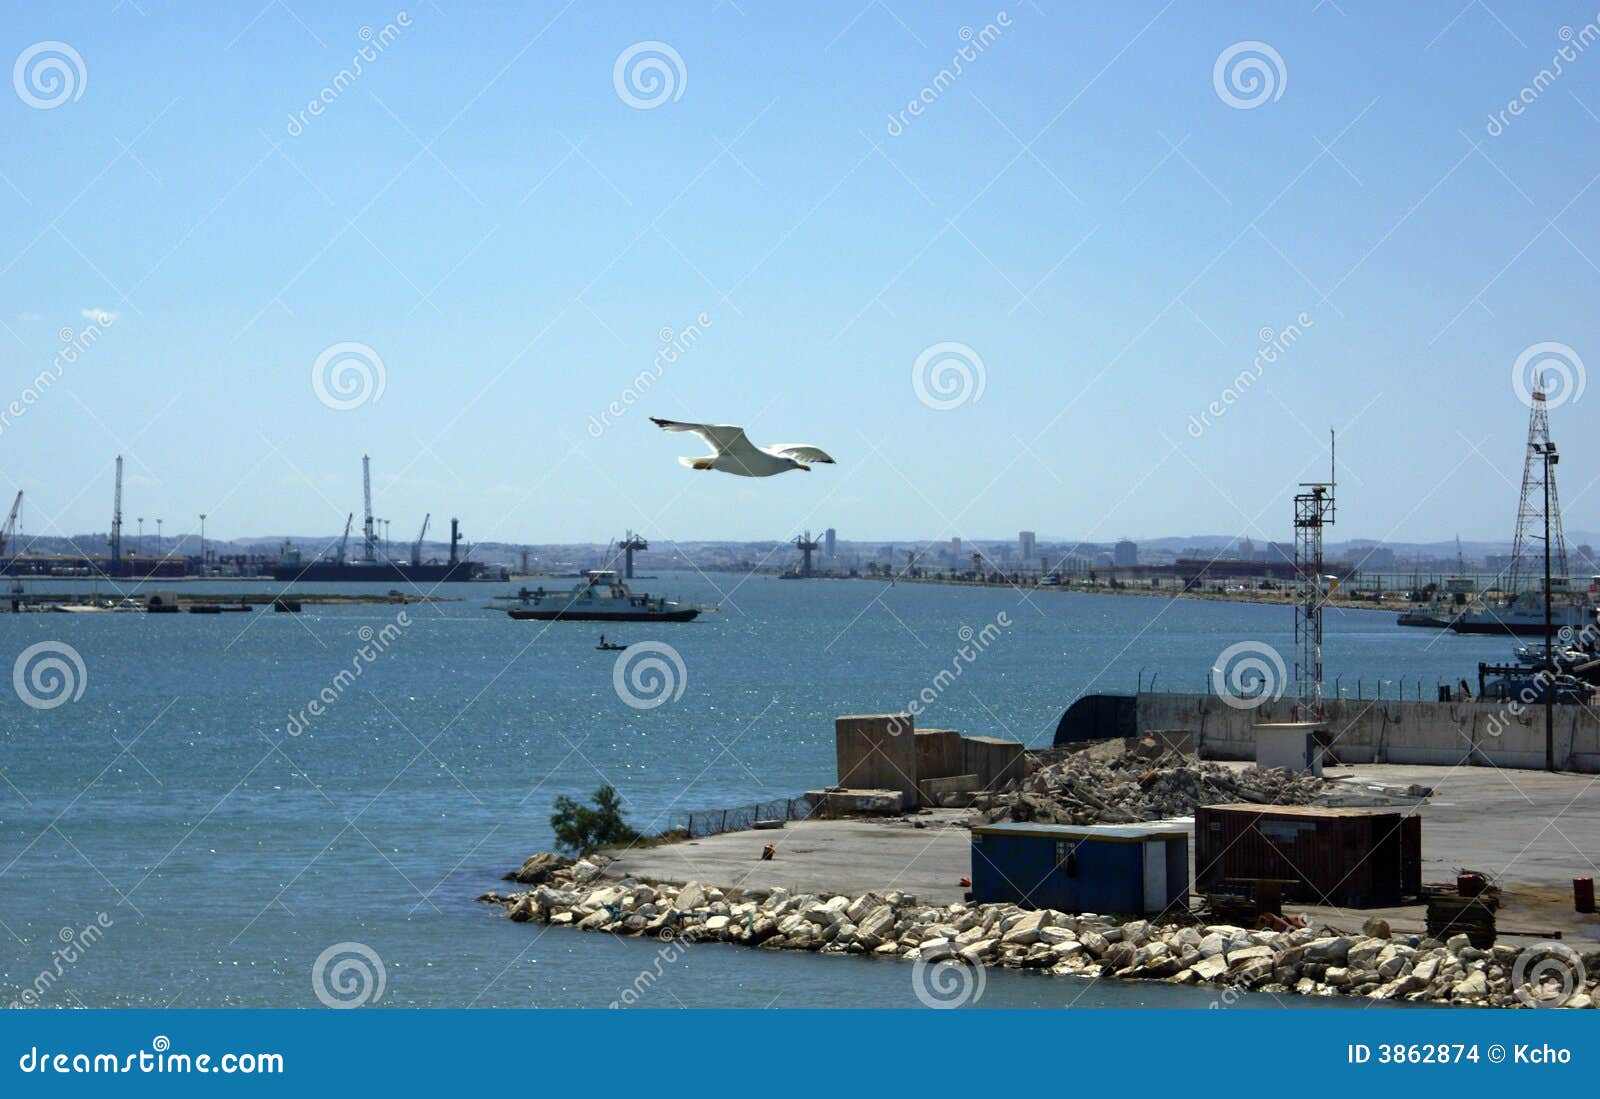 port of tunis